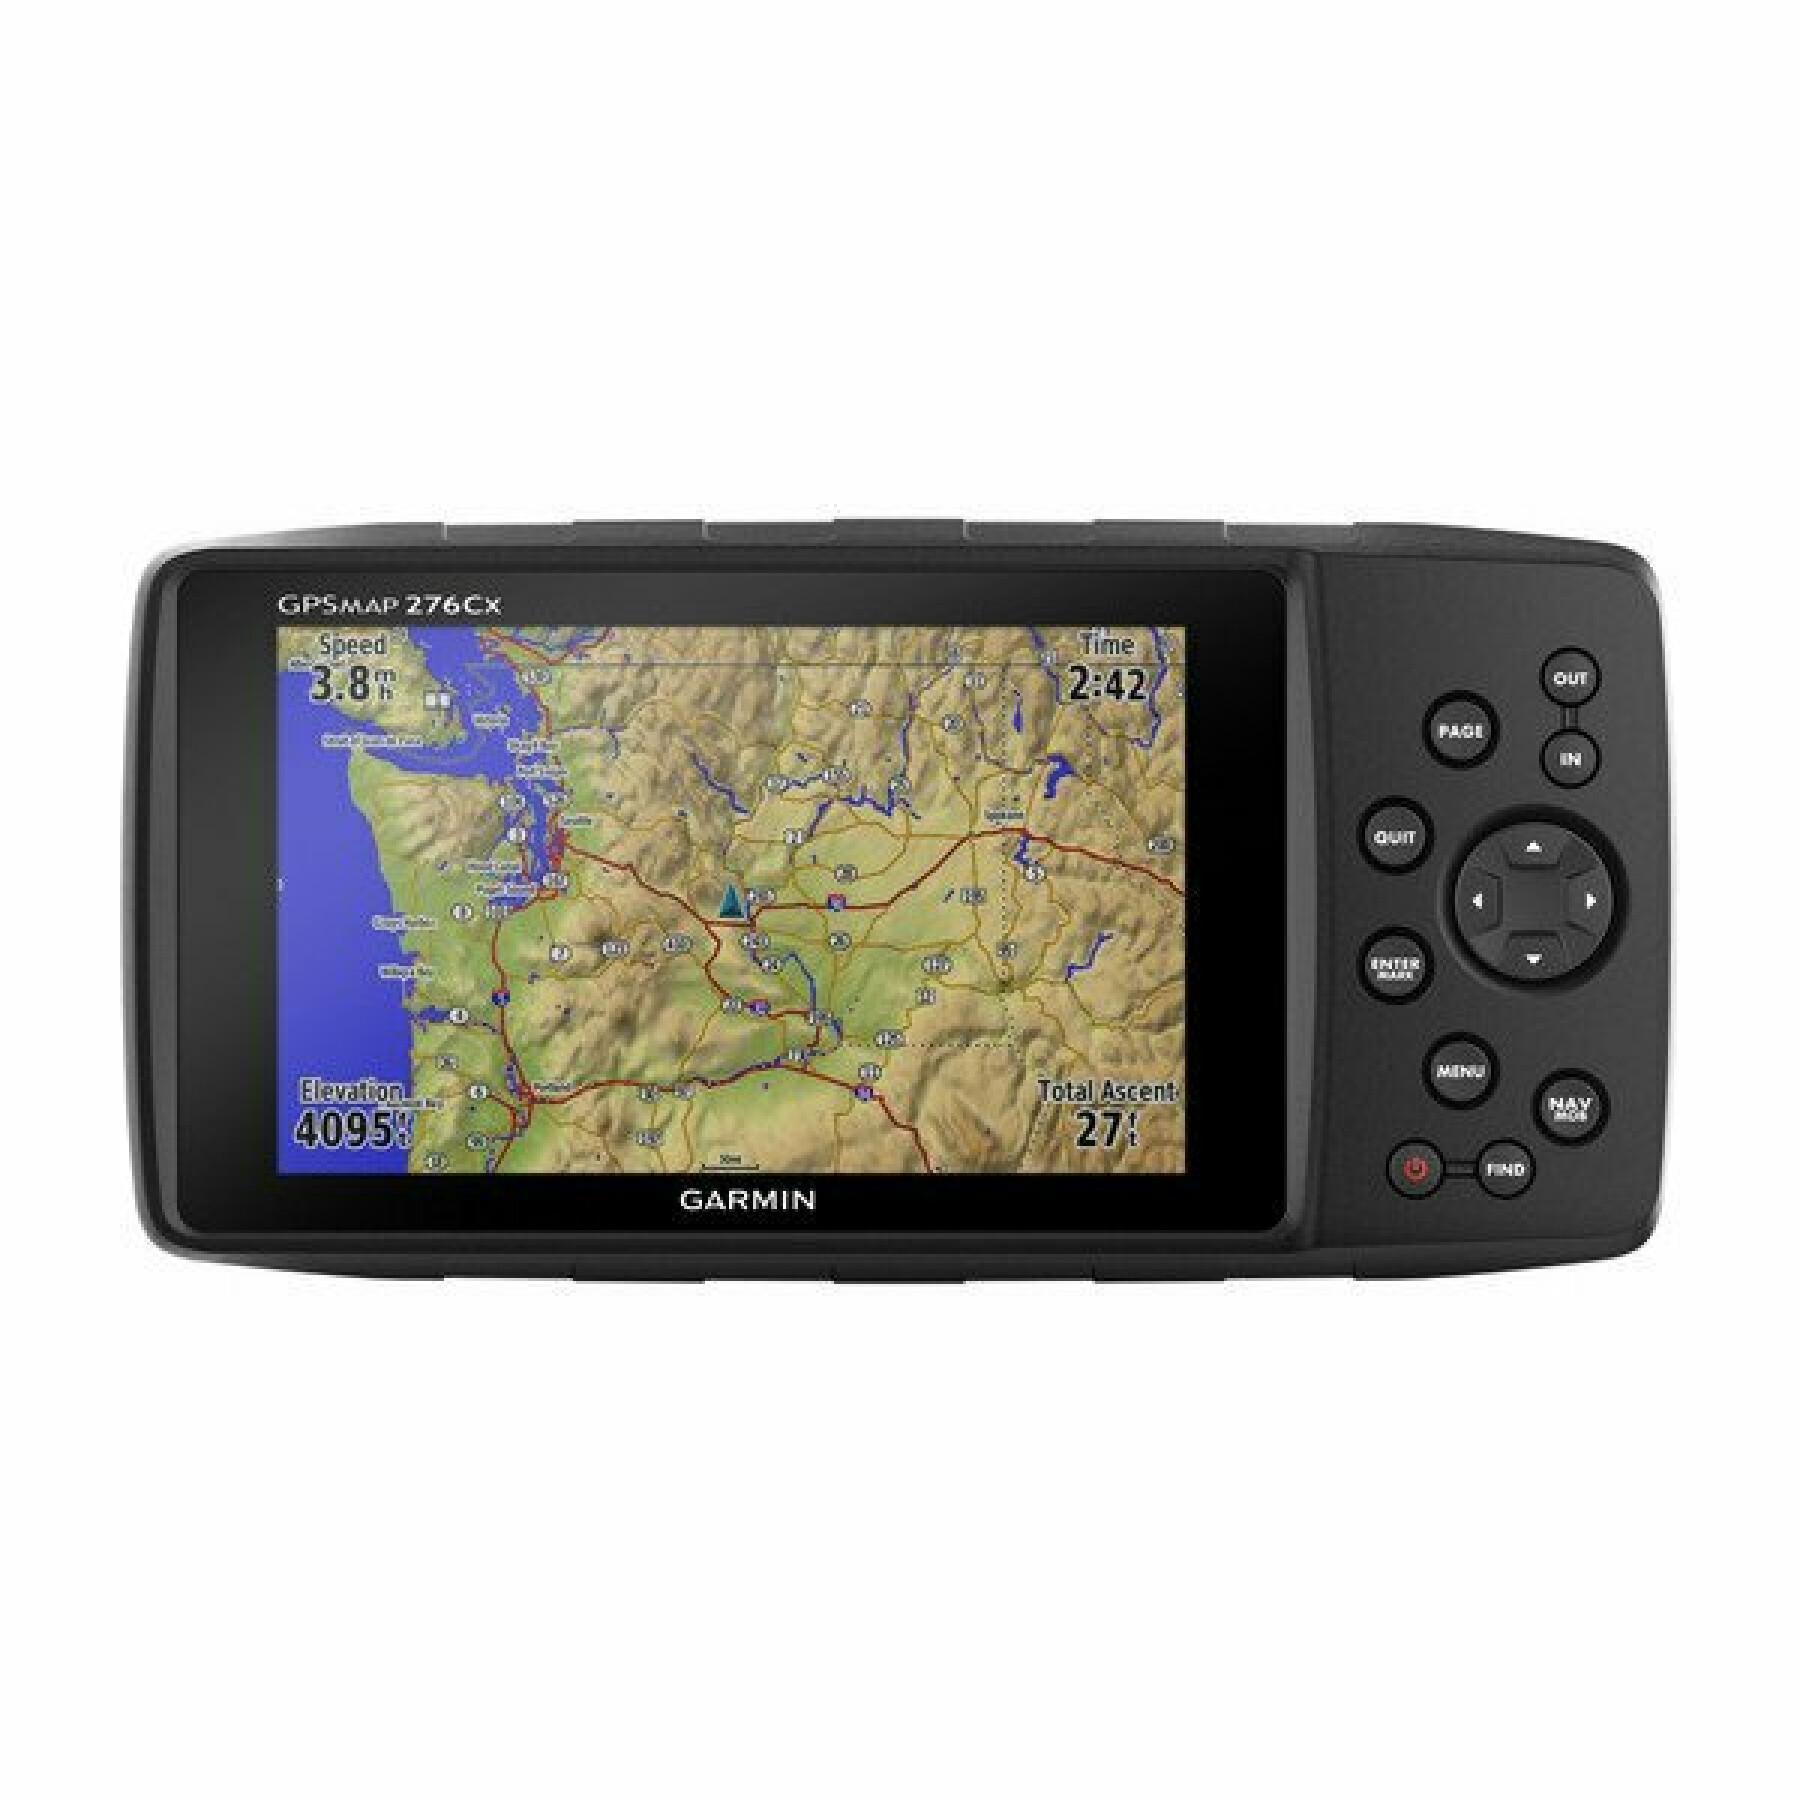 GPS Garmin 276 CX